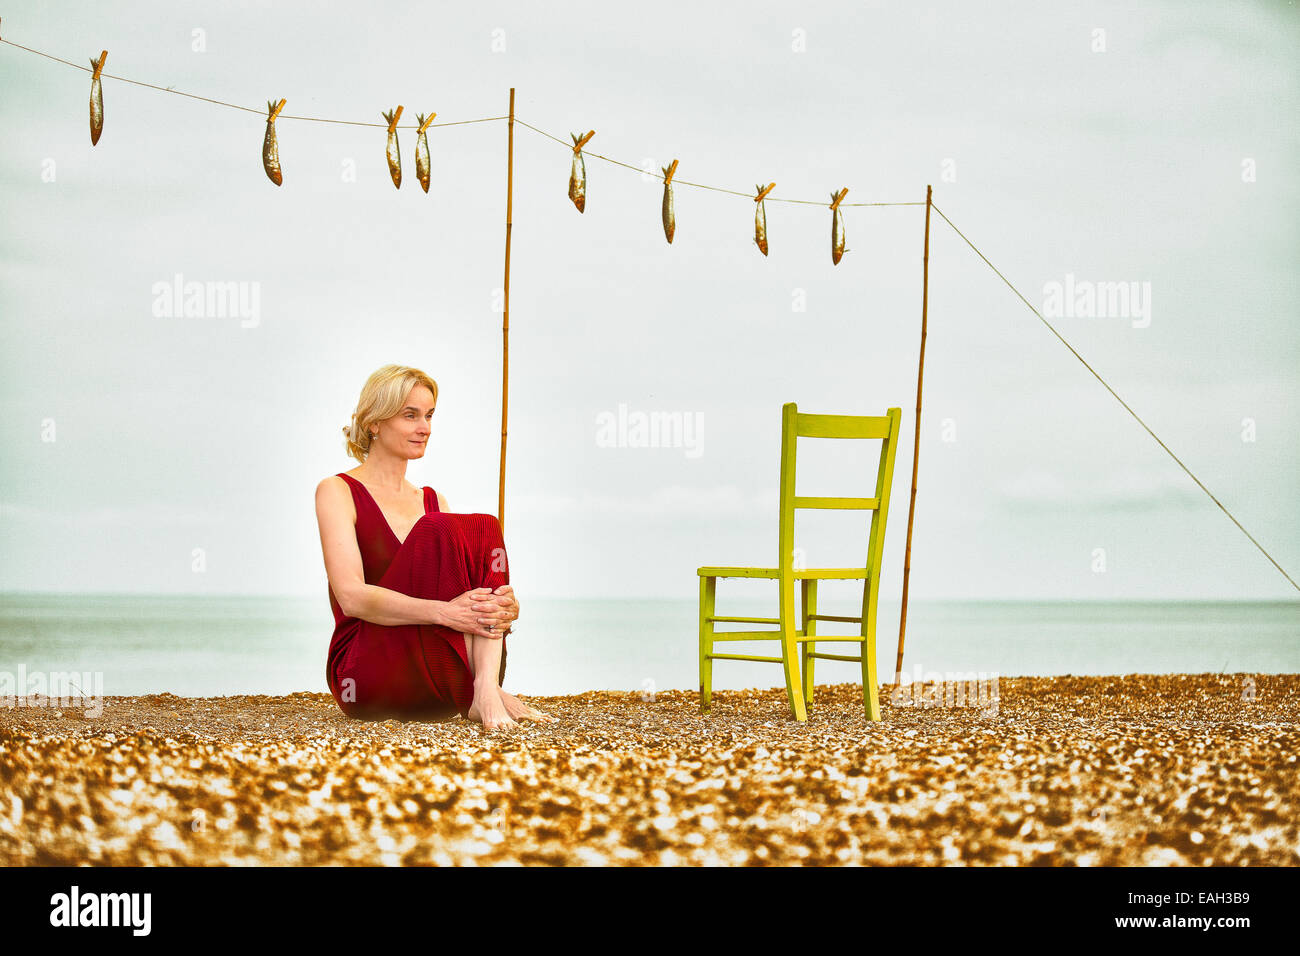 Woman beach dress chair shingle gold green washing line Stock Photo